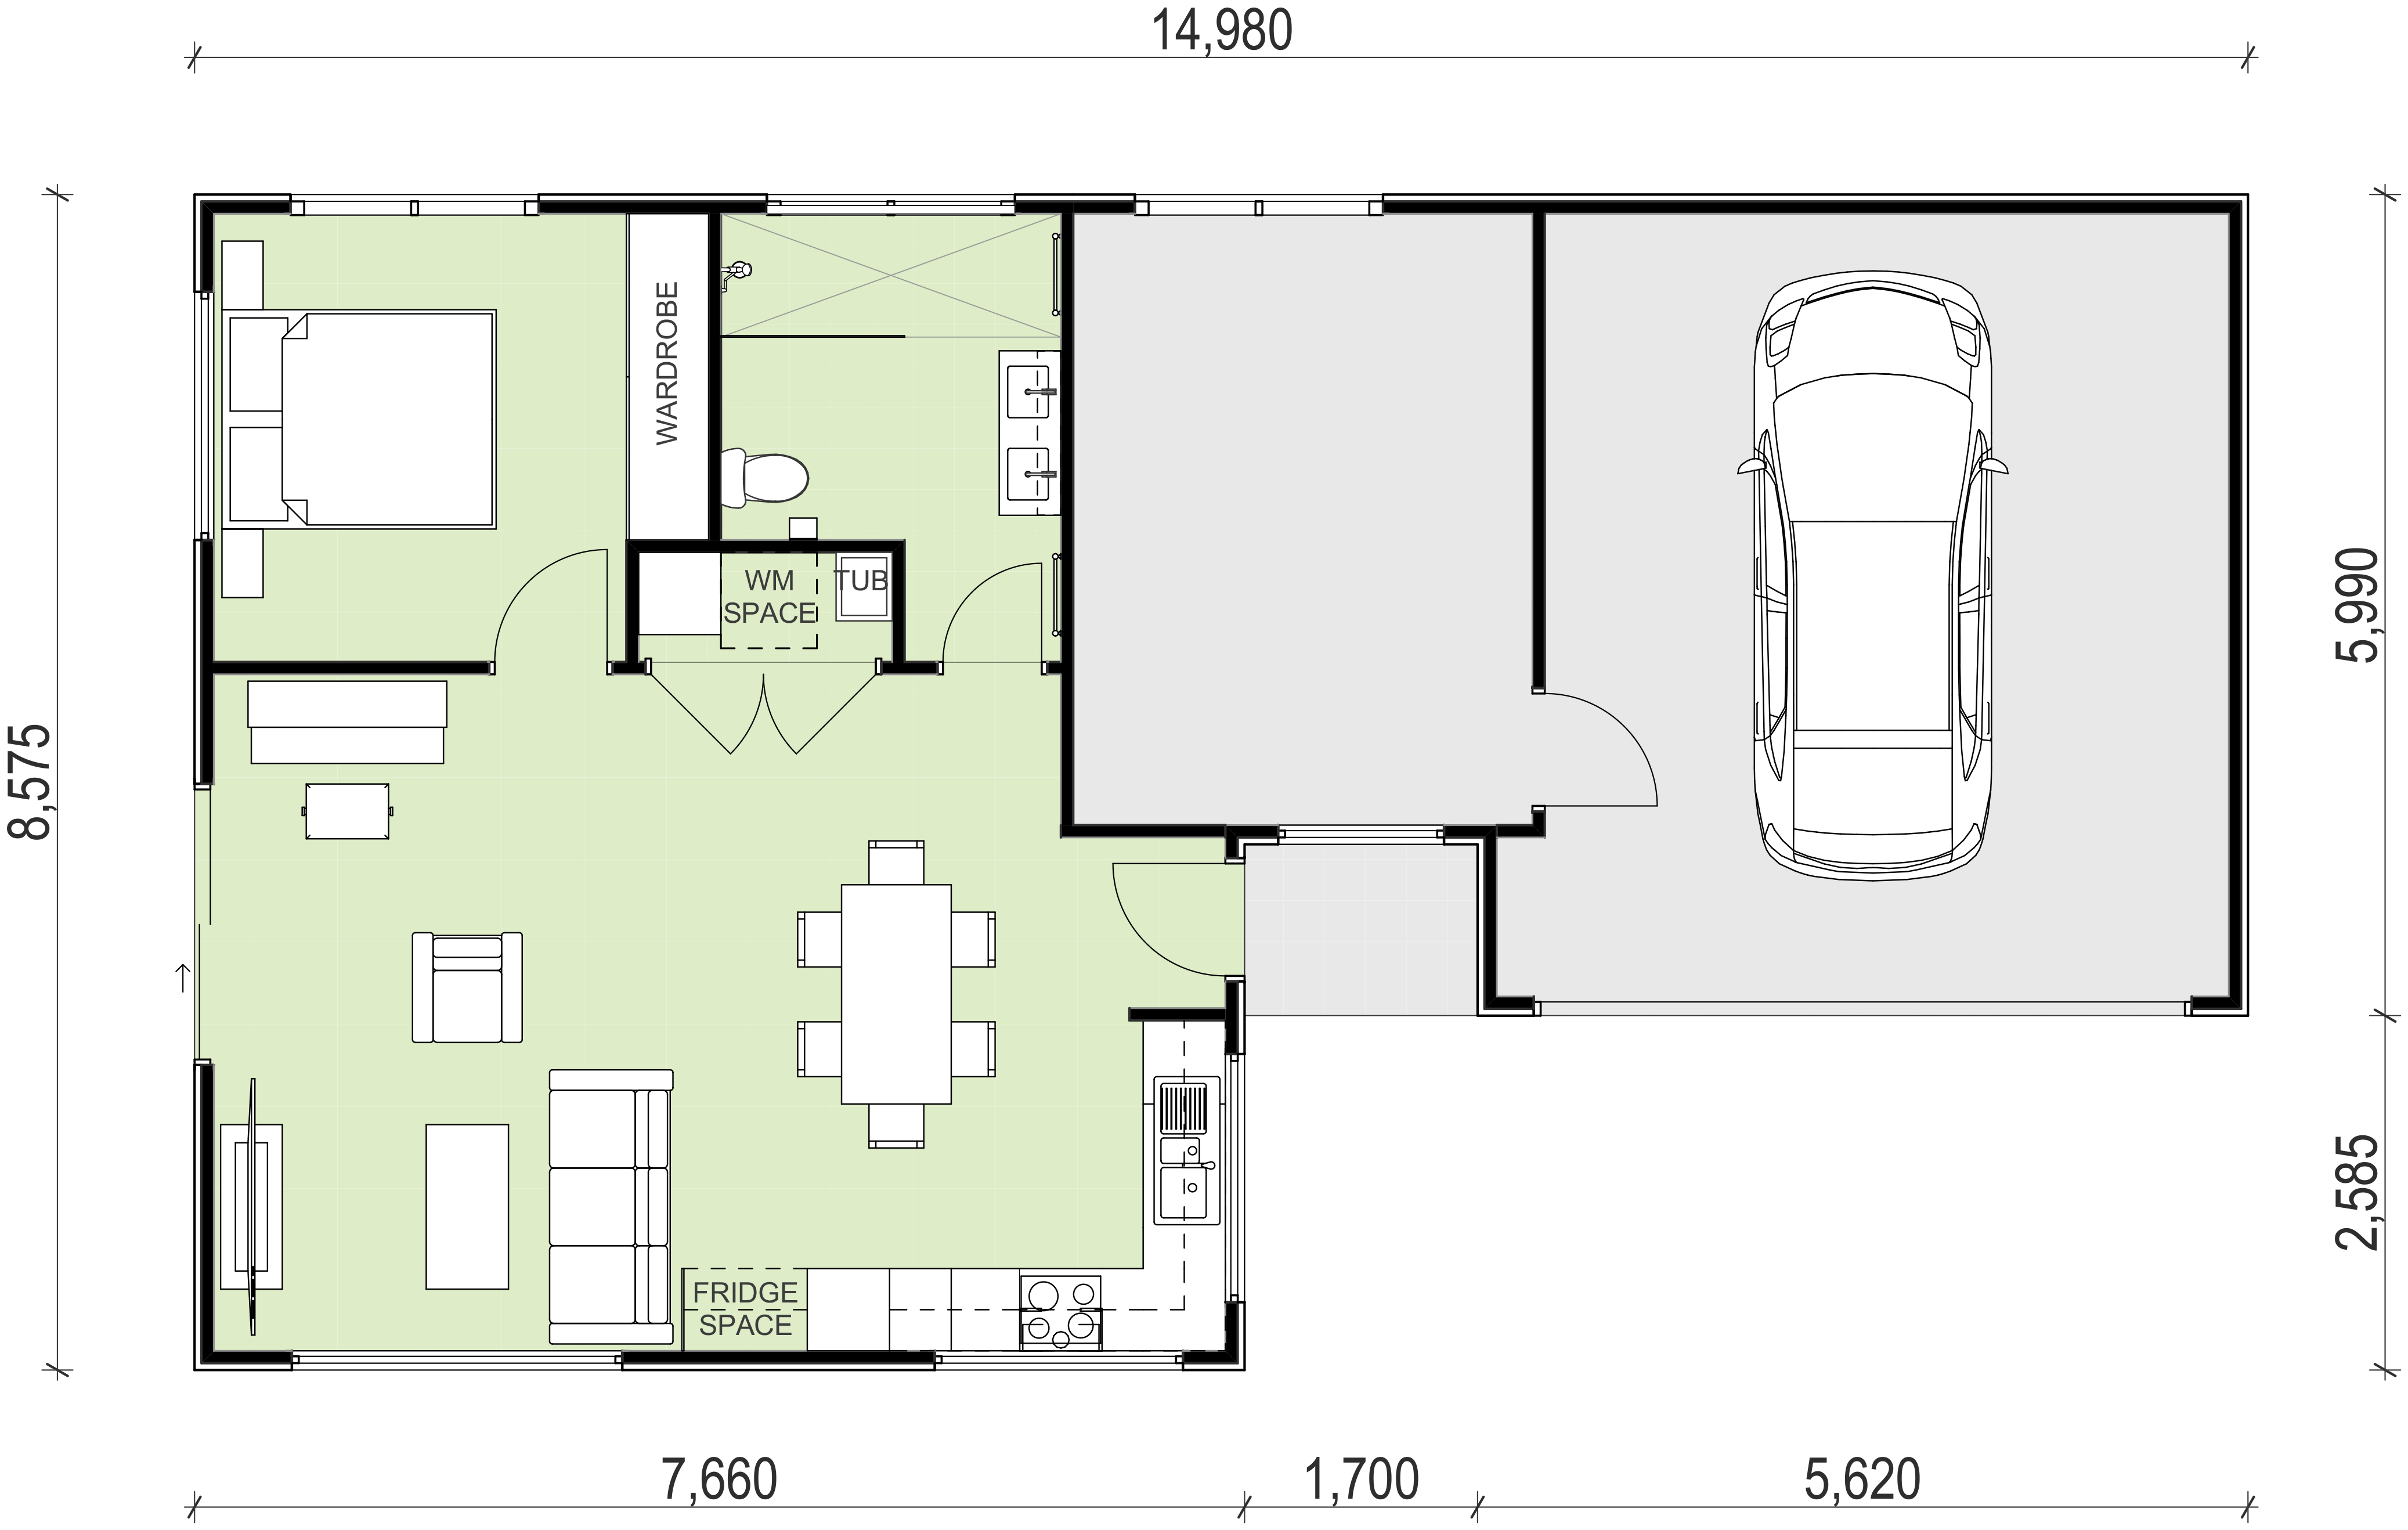 granny flat floor plan design with garage